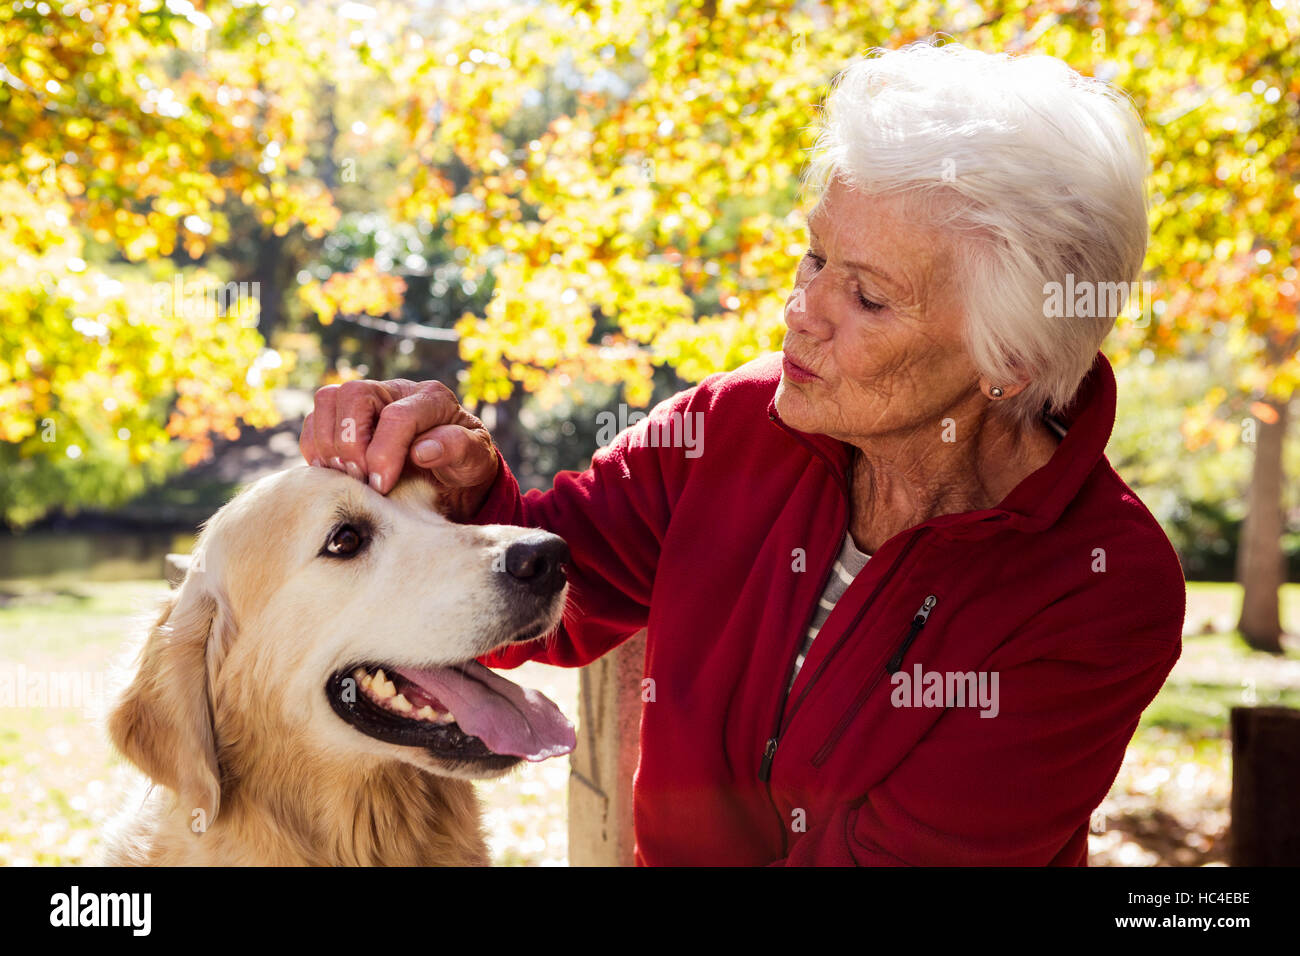 elderly woman sitting with dog Stock Photo